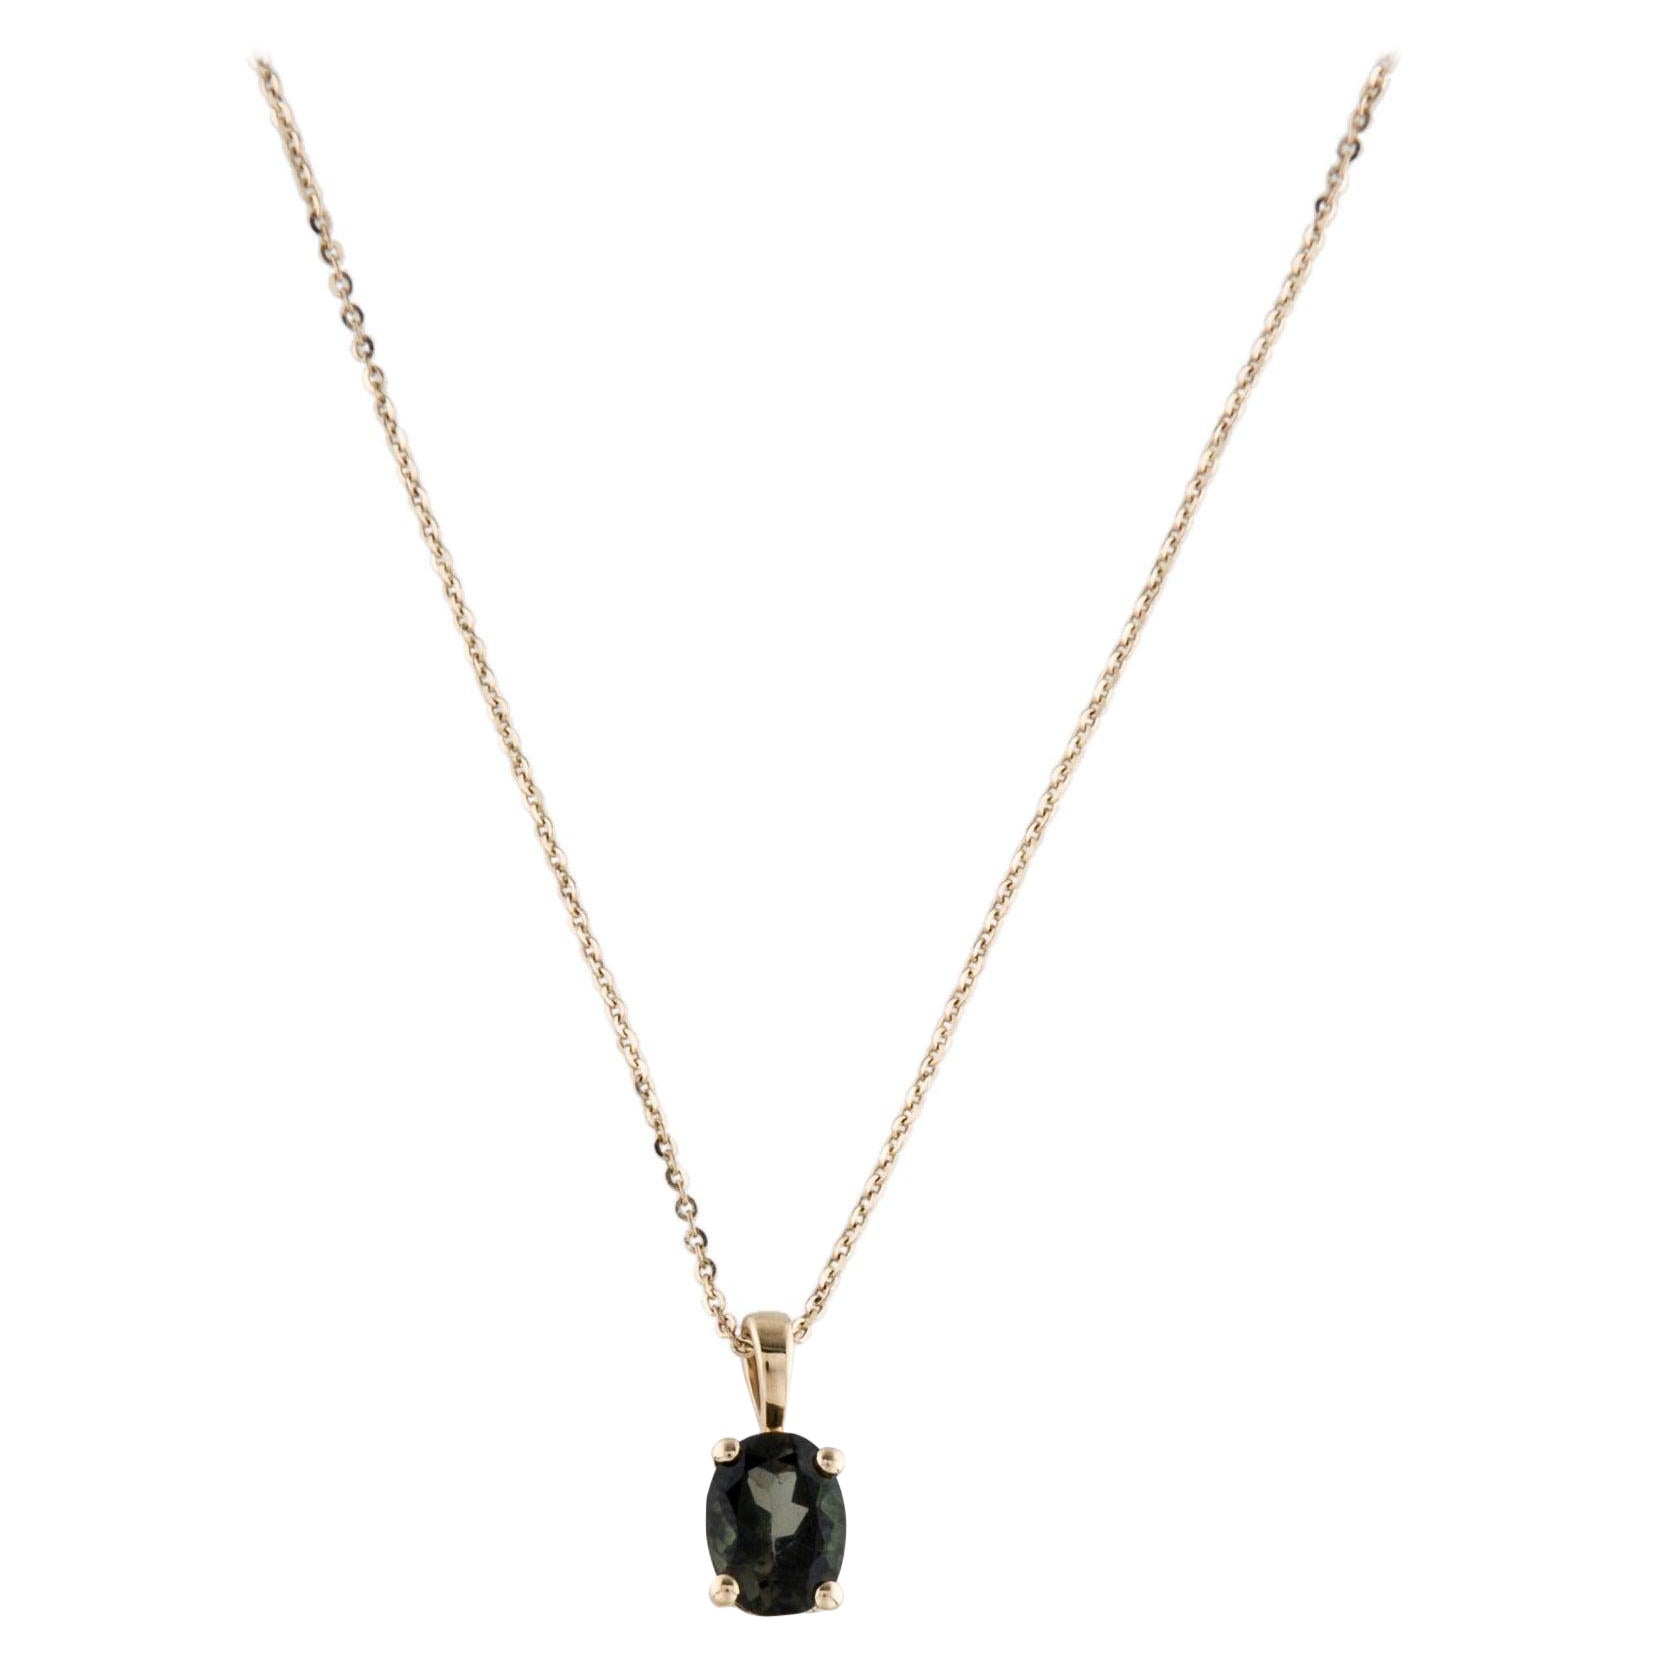 14K 1.27ctw Tourmaline Pendant Necklace - Exquisite Gemstone Statement Piece For Sale